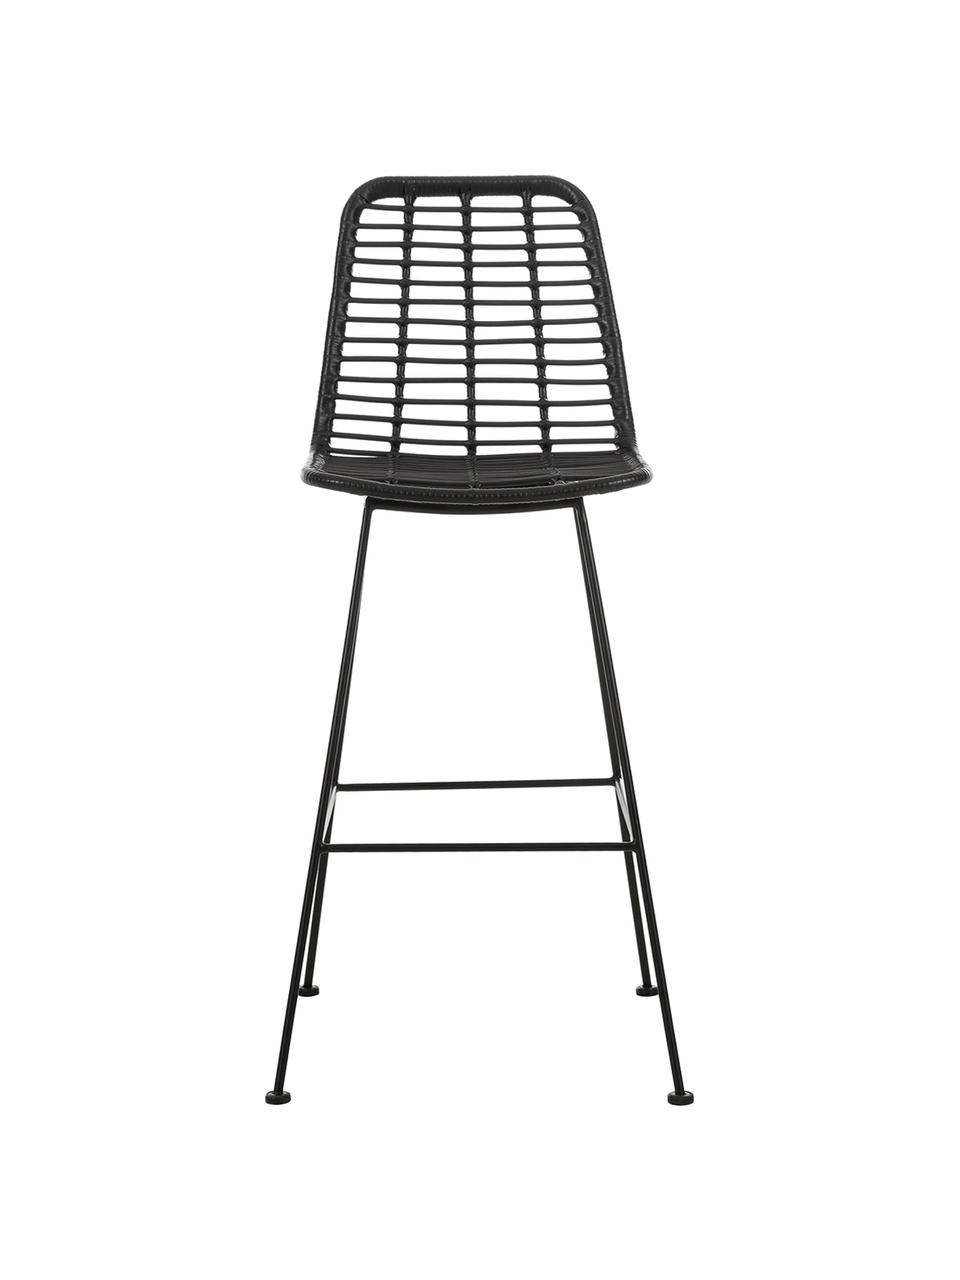 Chaise de bar en polyrotin Costa, Noir, larg. 56 x haut. 110 cm